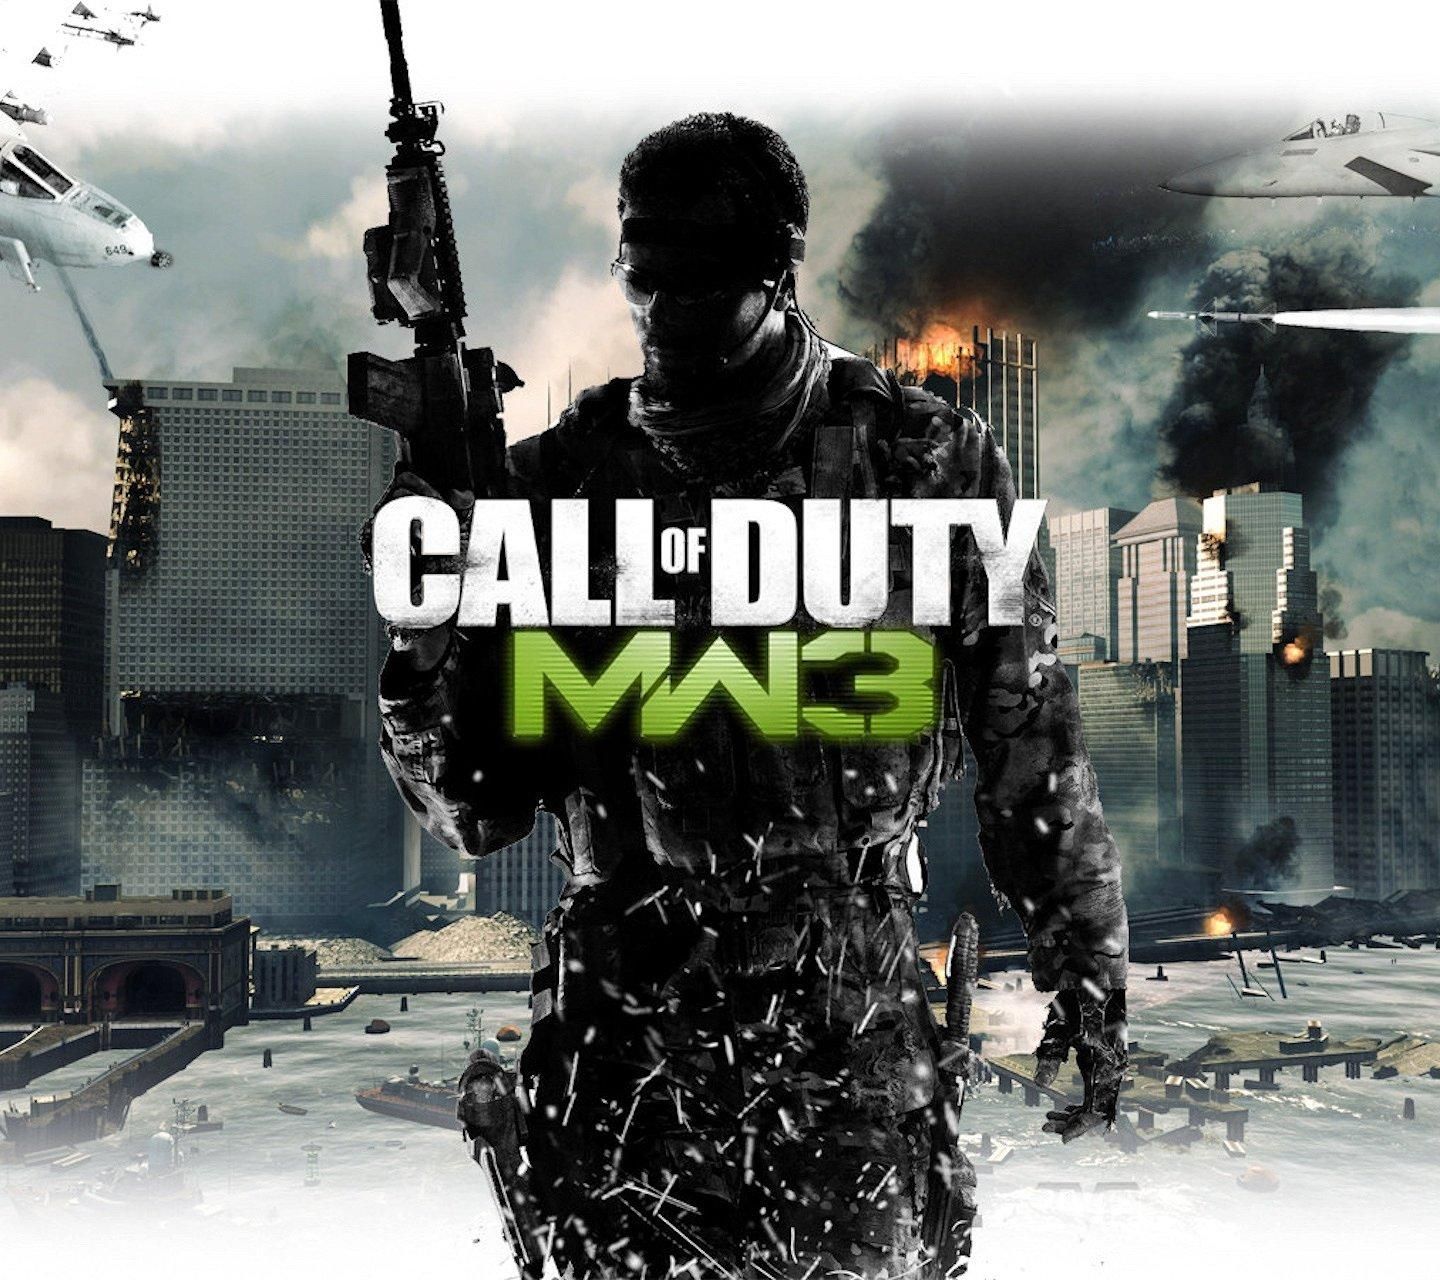 Call of duty 4 3. Картина Call of Duty: Modern Warfare 3. Кал оф дьюти Modern Warfare 3. Call of Duty 4 Modern Warfare Постер. Call of Duty мв3.